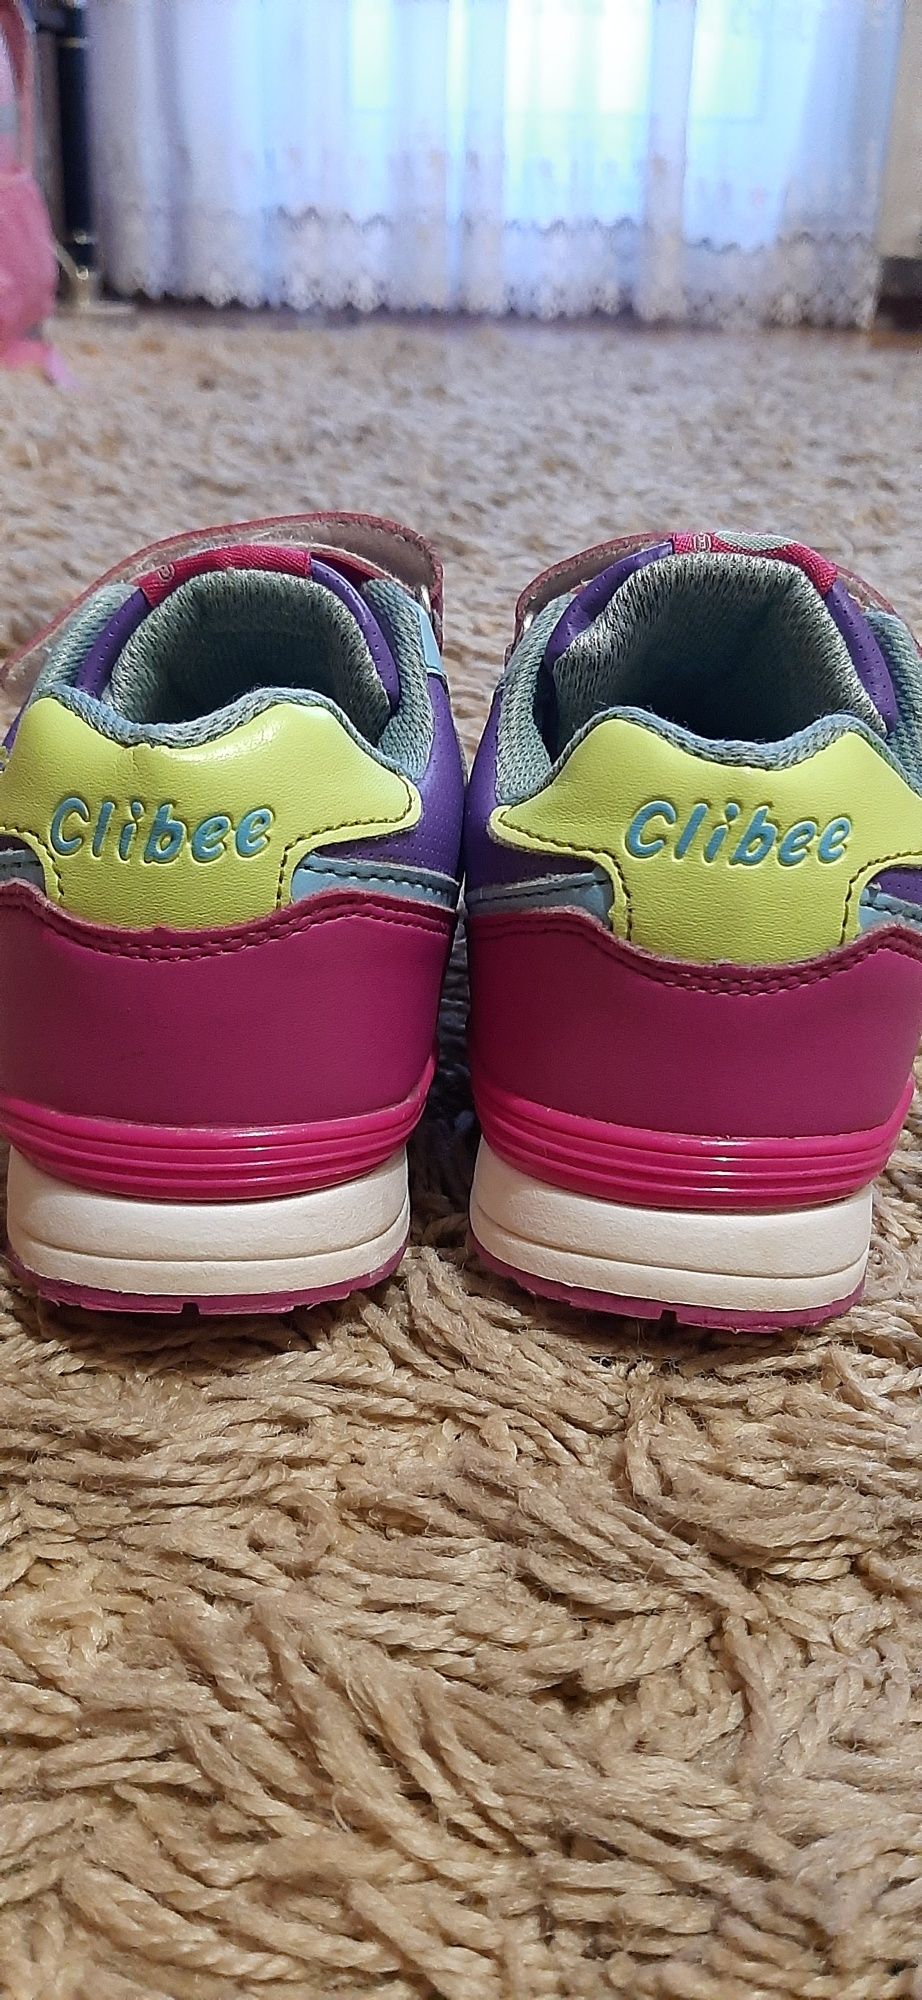 Продам кроссовки ТМ Clibee, 31 размер